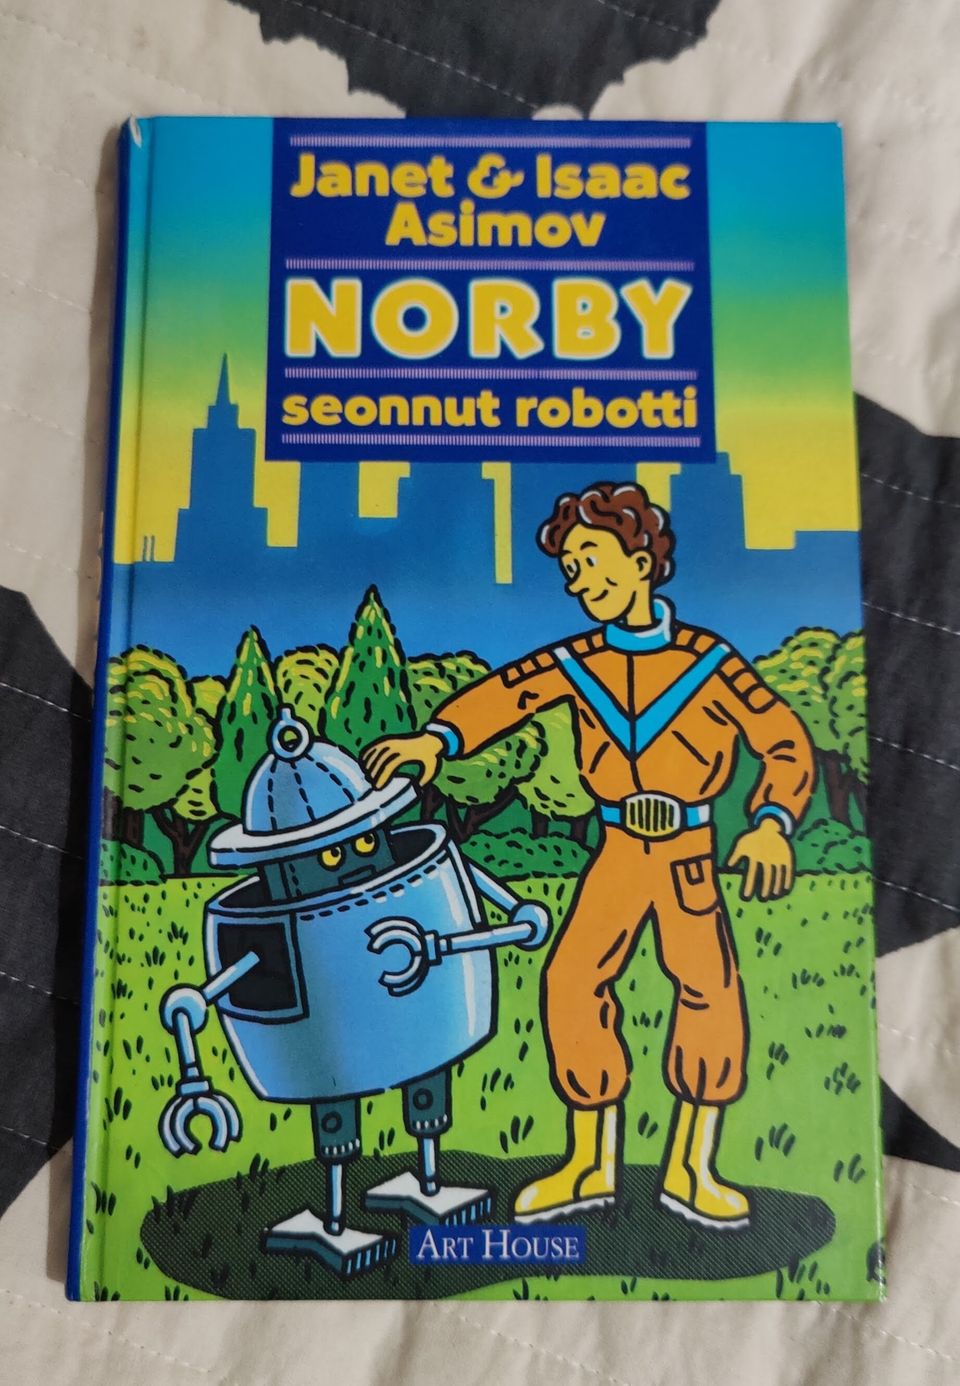 Norby Seonnut robotti